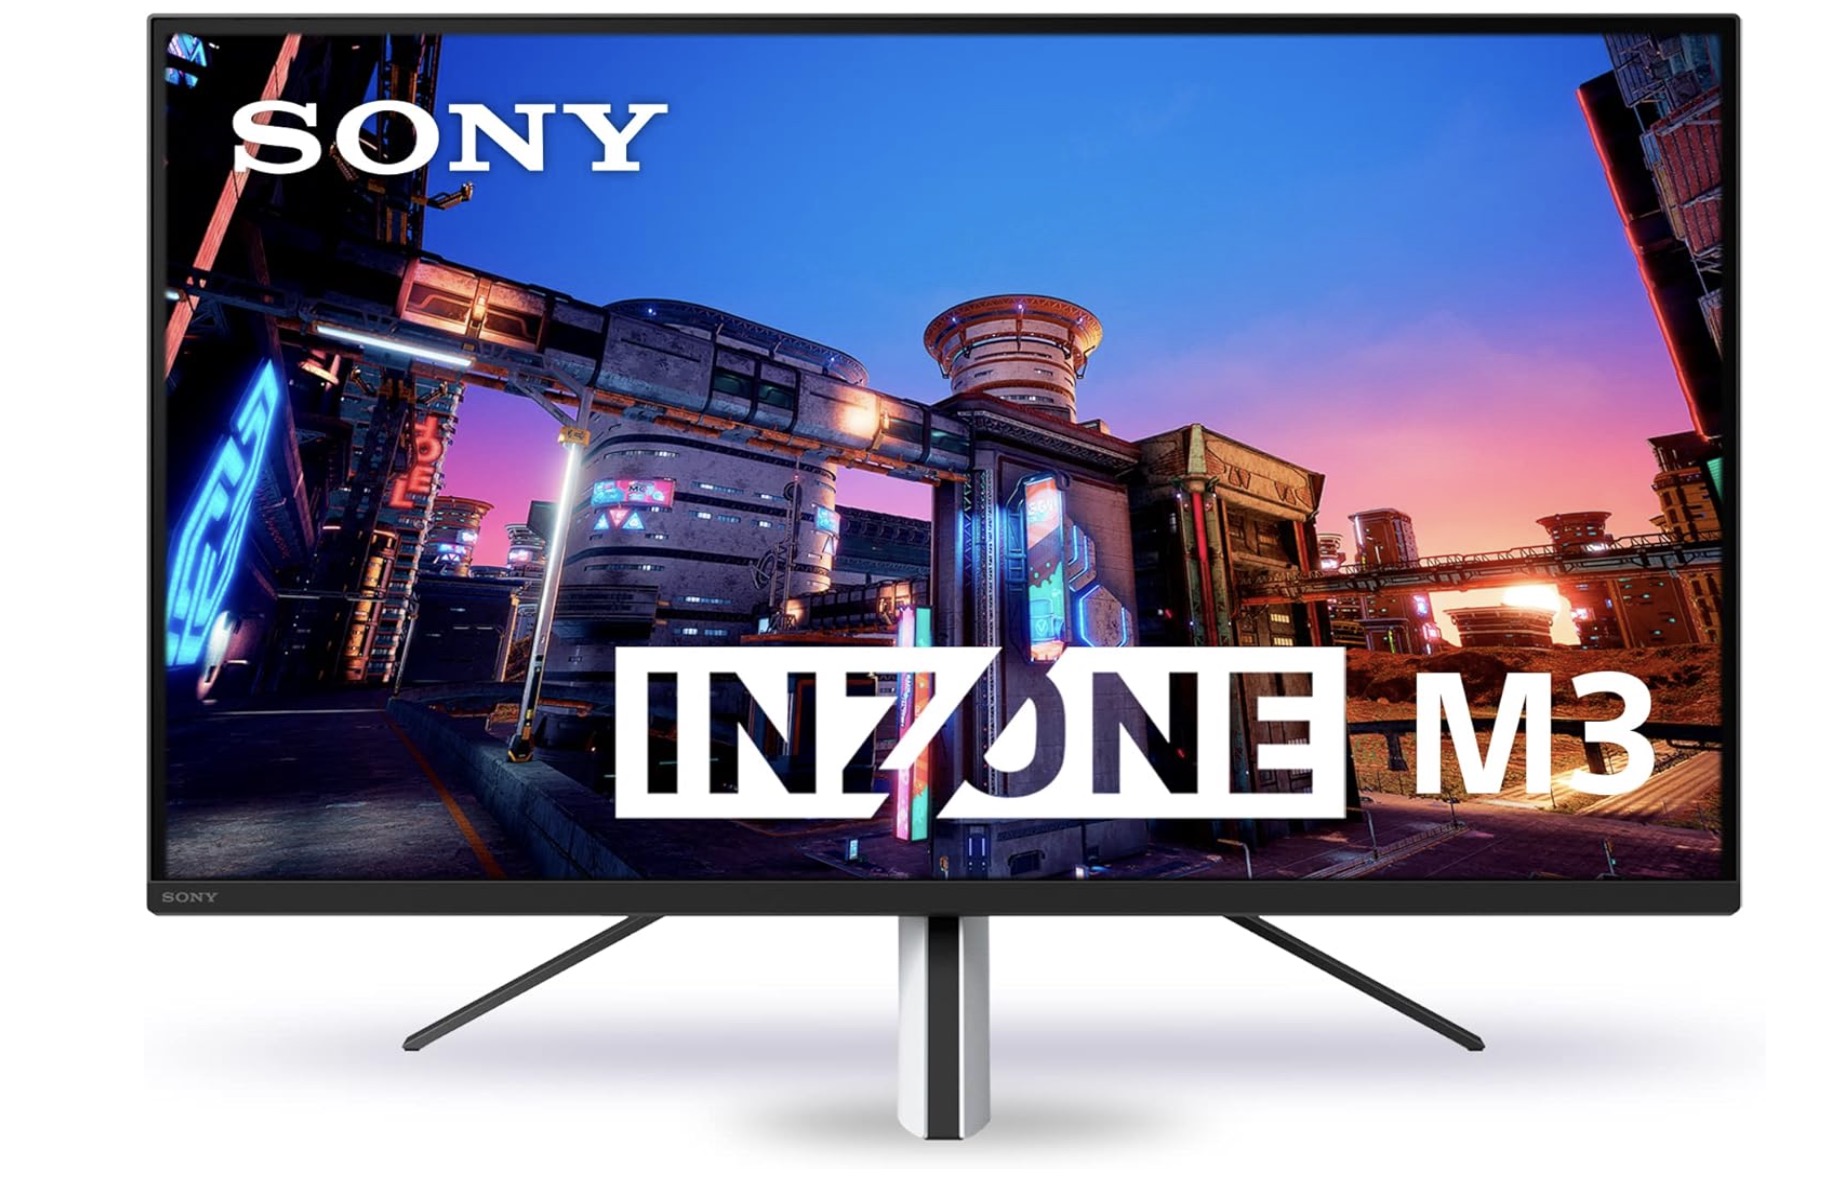 Monitor Sony INZONE M3 